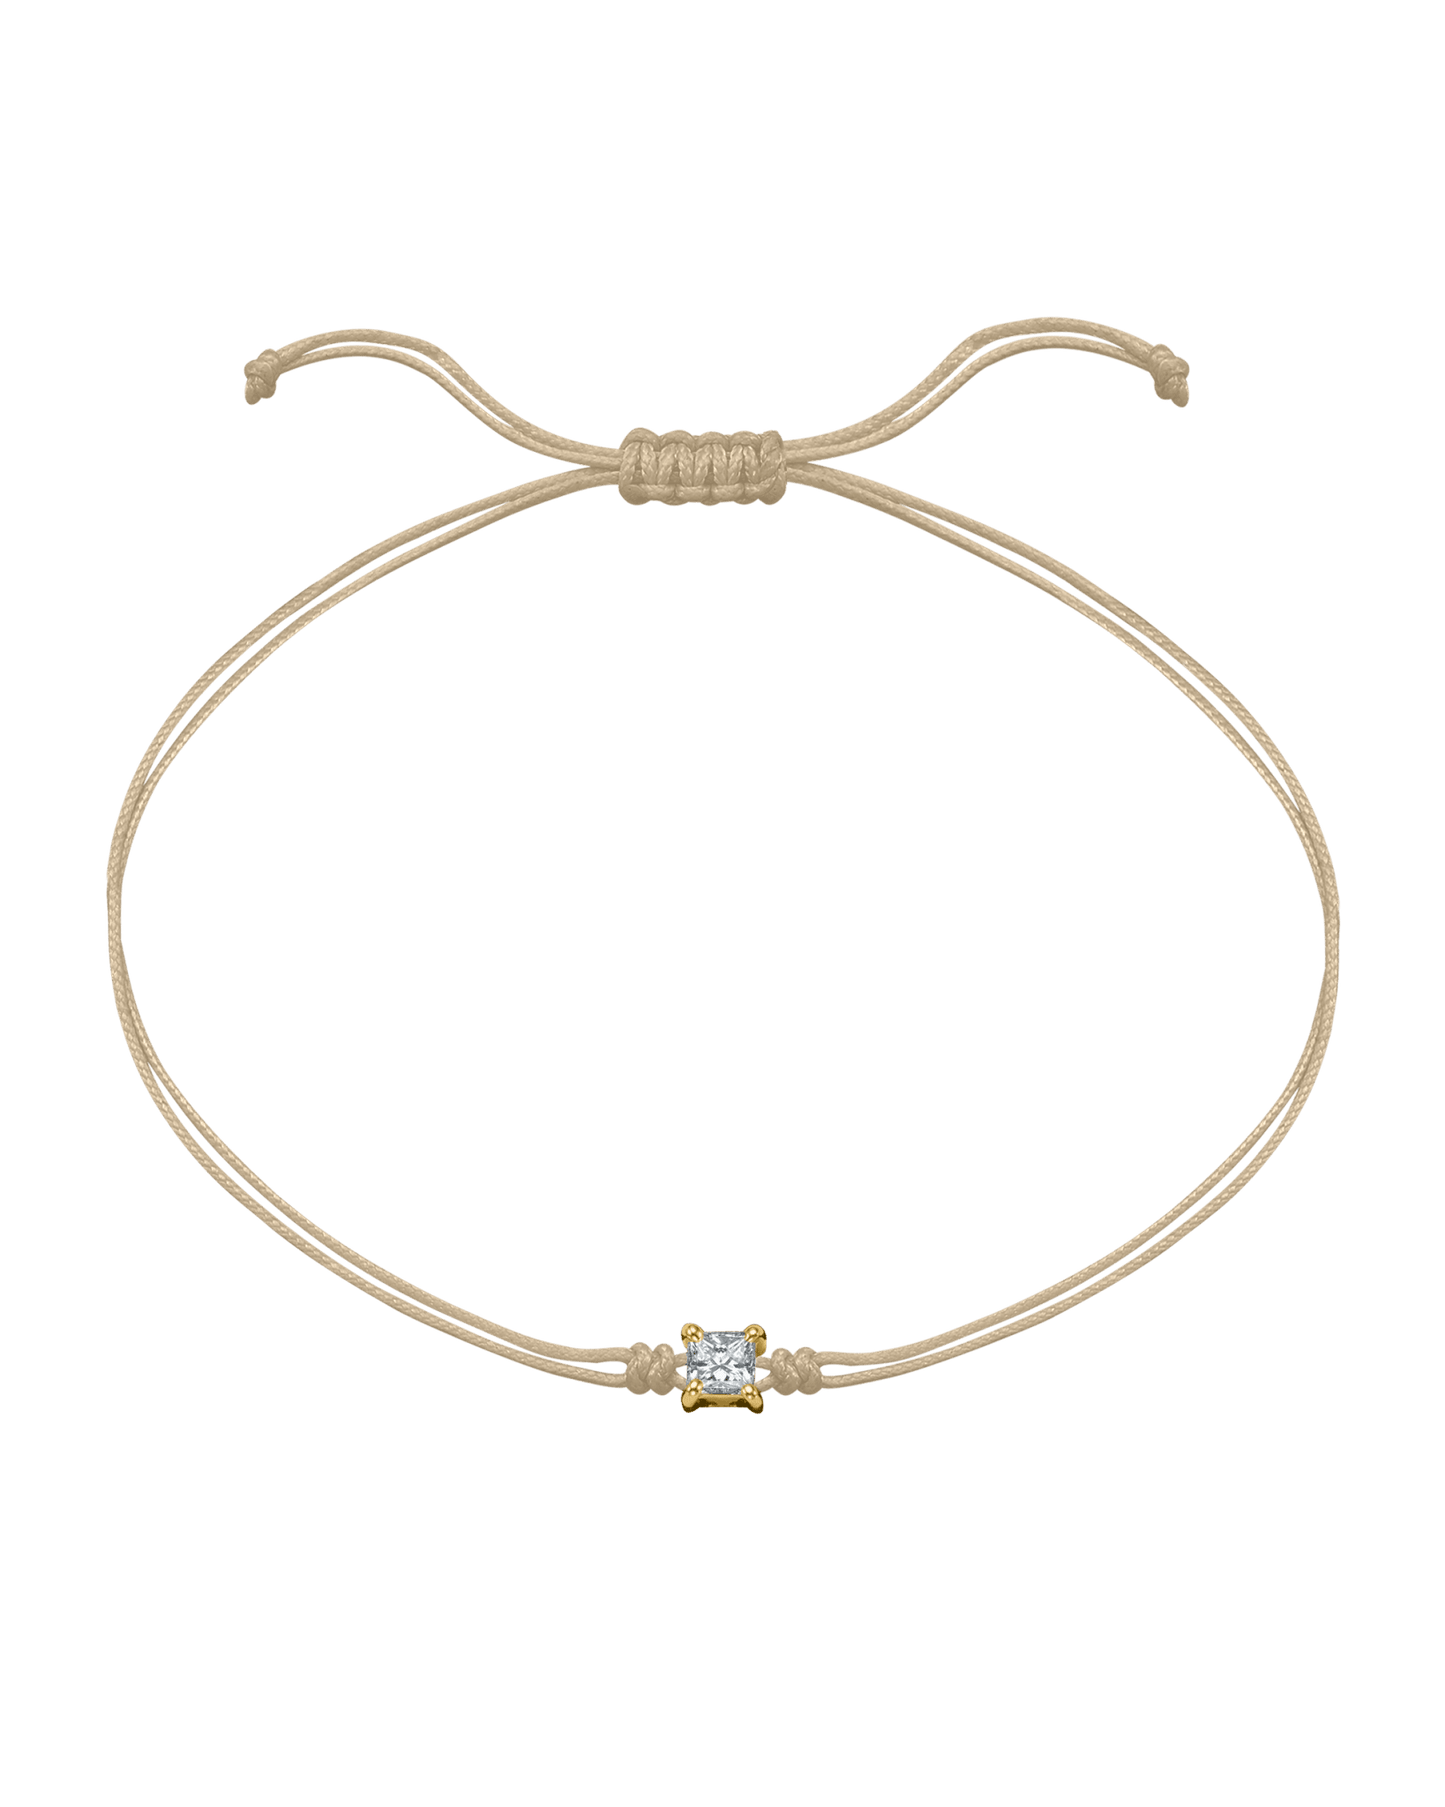 Princess Diamond String Of Love - 14K Yellow Gold Bracelet 14K Solid Gold Beige 